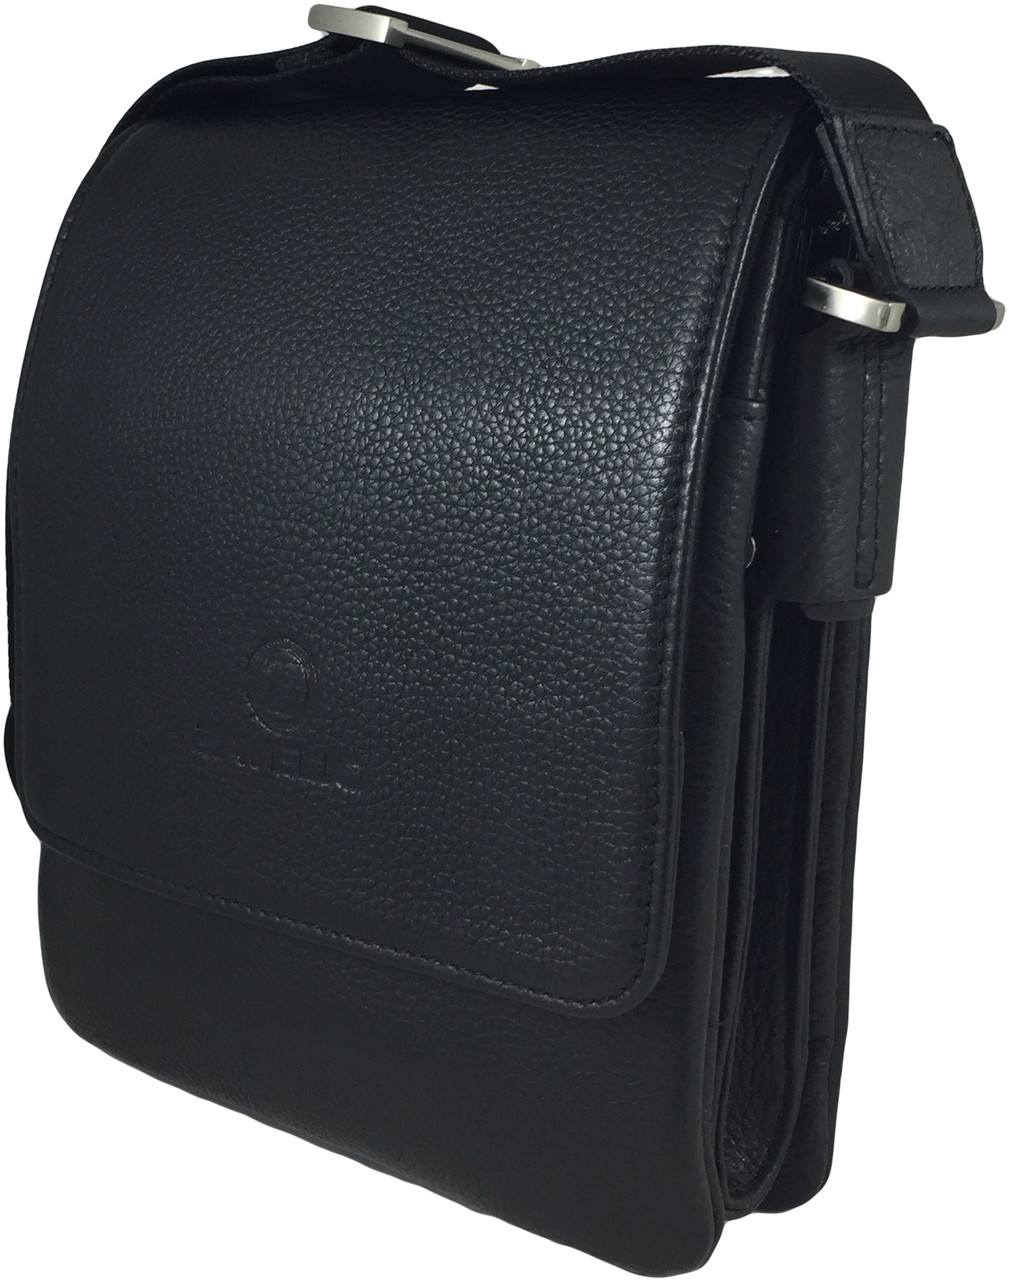  Lemuvlt Small Crossbody bag for men shoulder bag mens purse  satchel leather messenger bag gift man (Black) : Clothing, Shoes & Jewelry